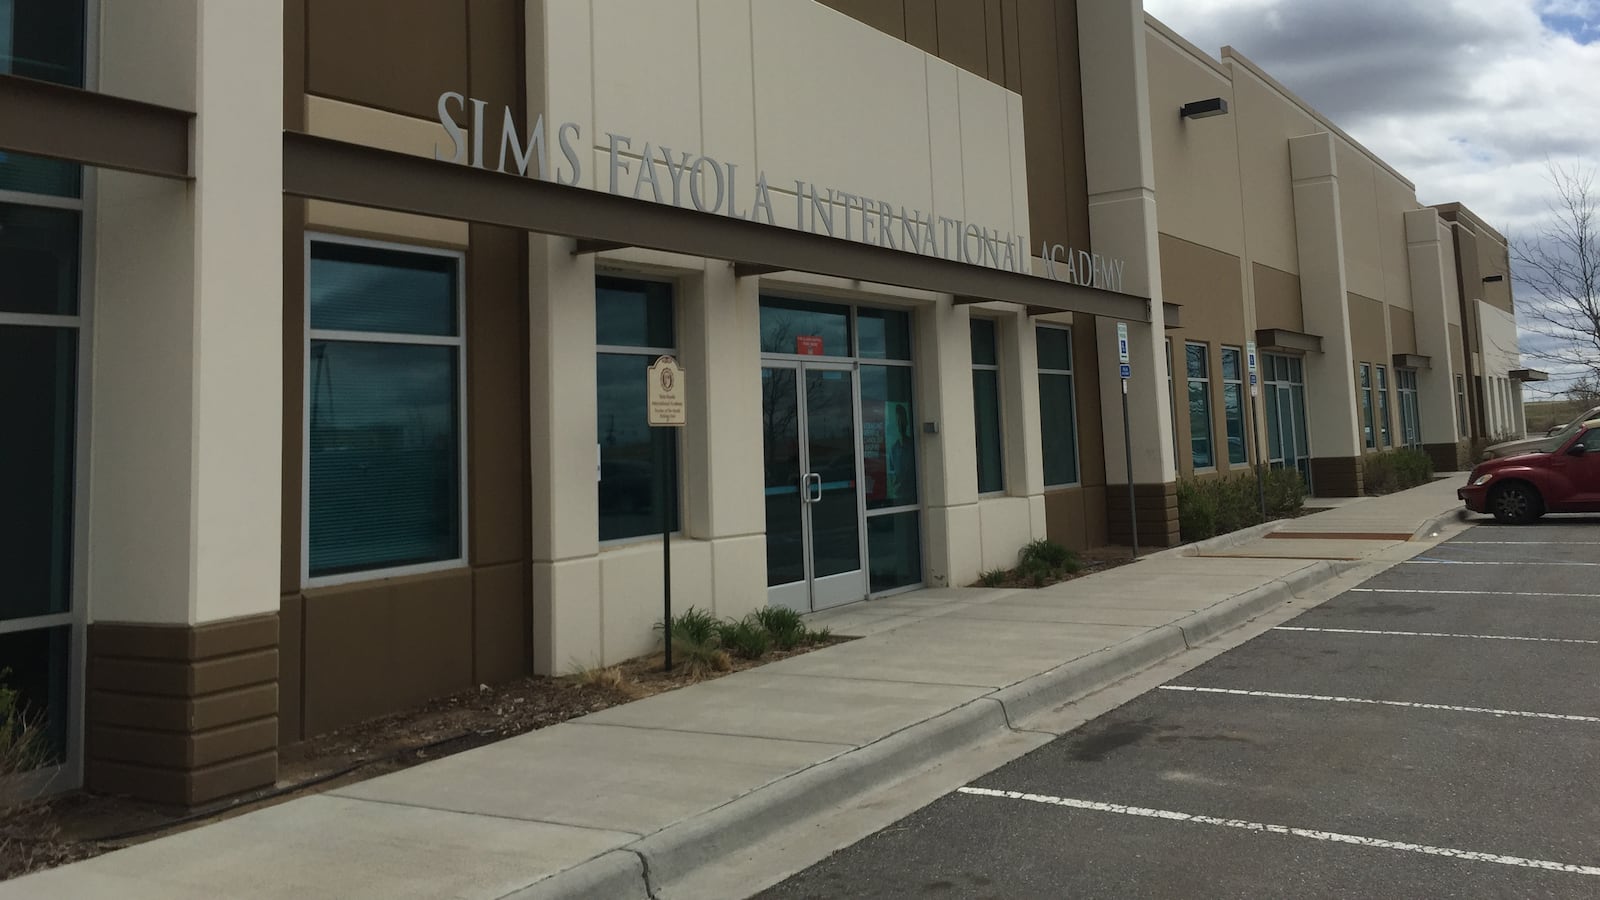 Sims Fayola International Academy, in far northeast Denver, is closing this year.